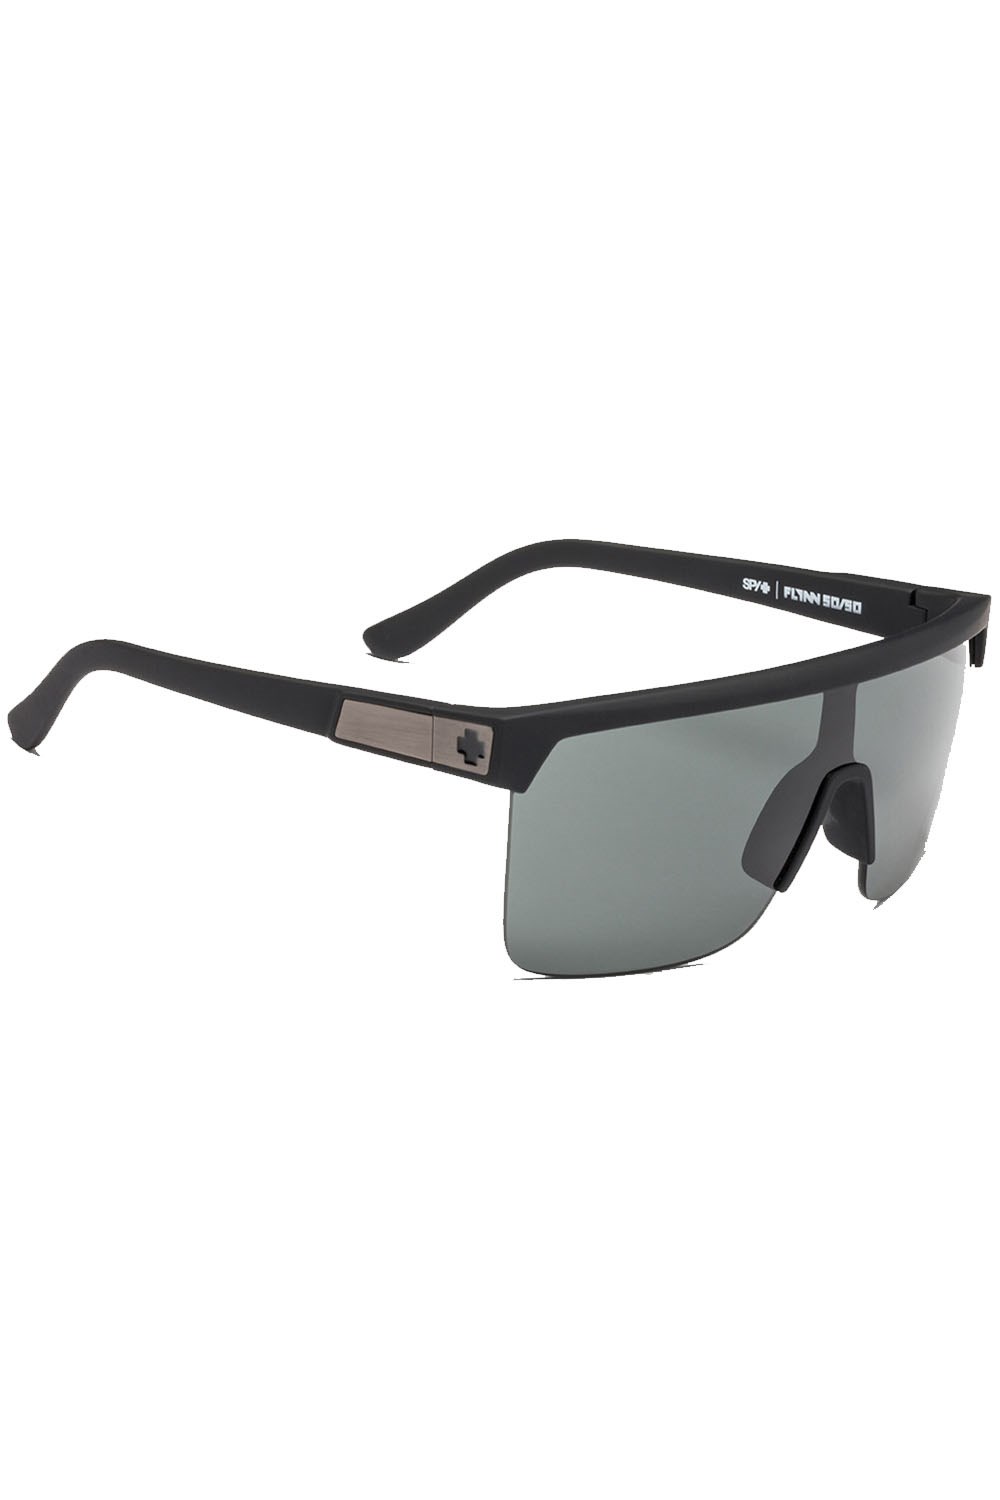 Flynn 5050 Unisex Sunglasses -